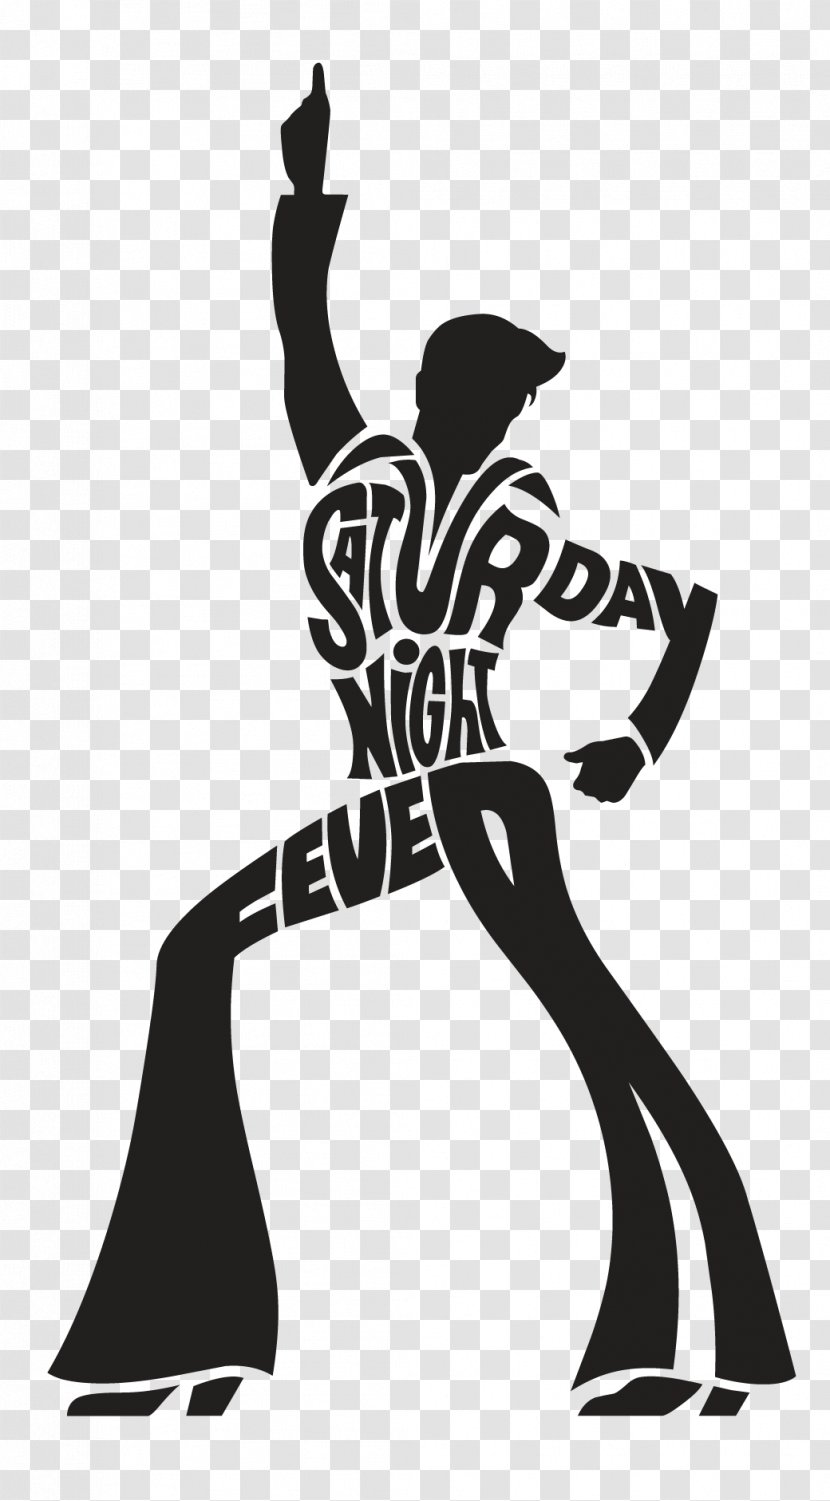 Silhouette Saturday Night Fever Vector Graphics Disco - John Travolta Transparent PNG